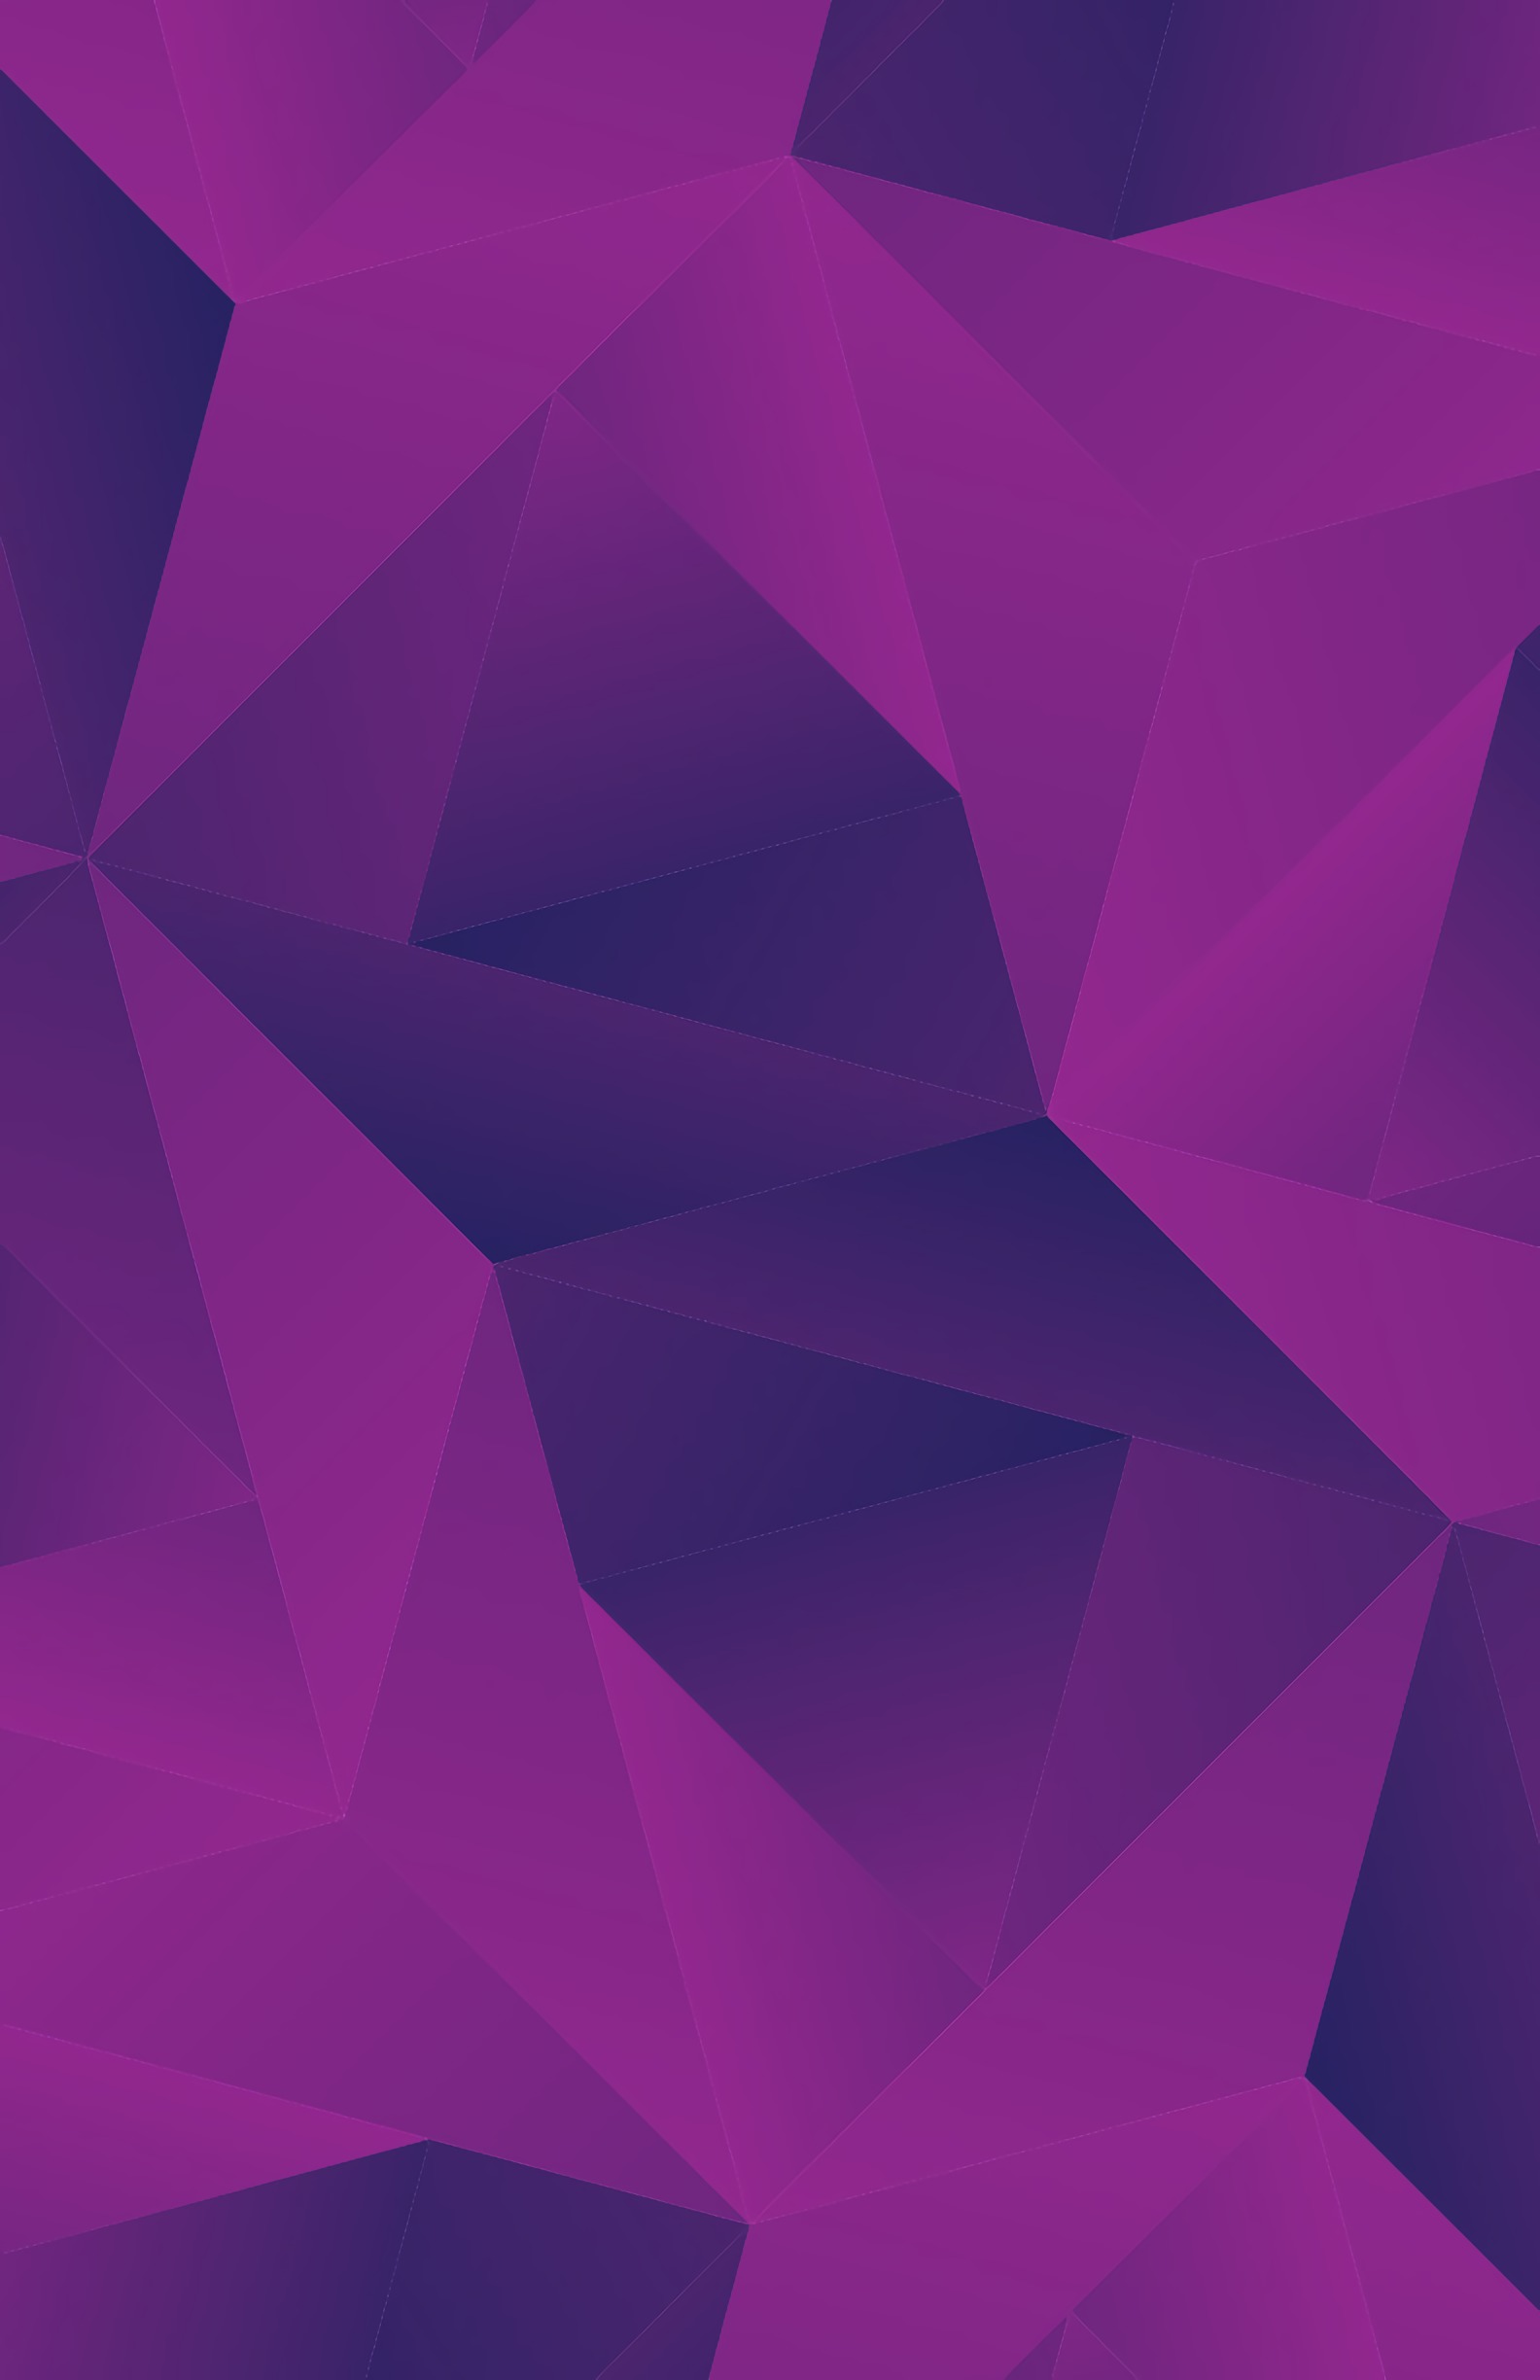 Free Purple Background